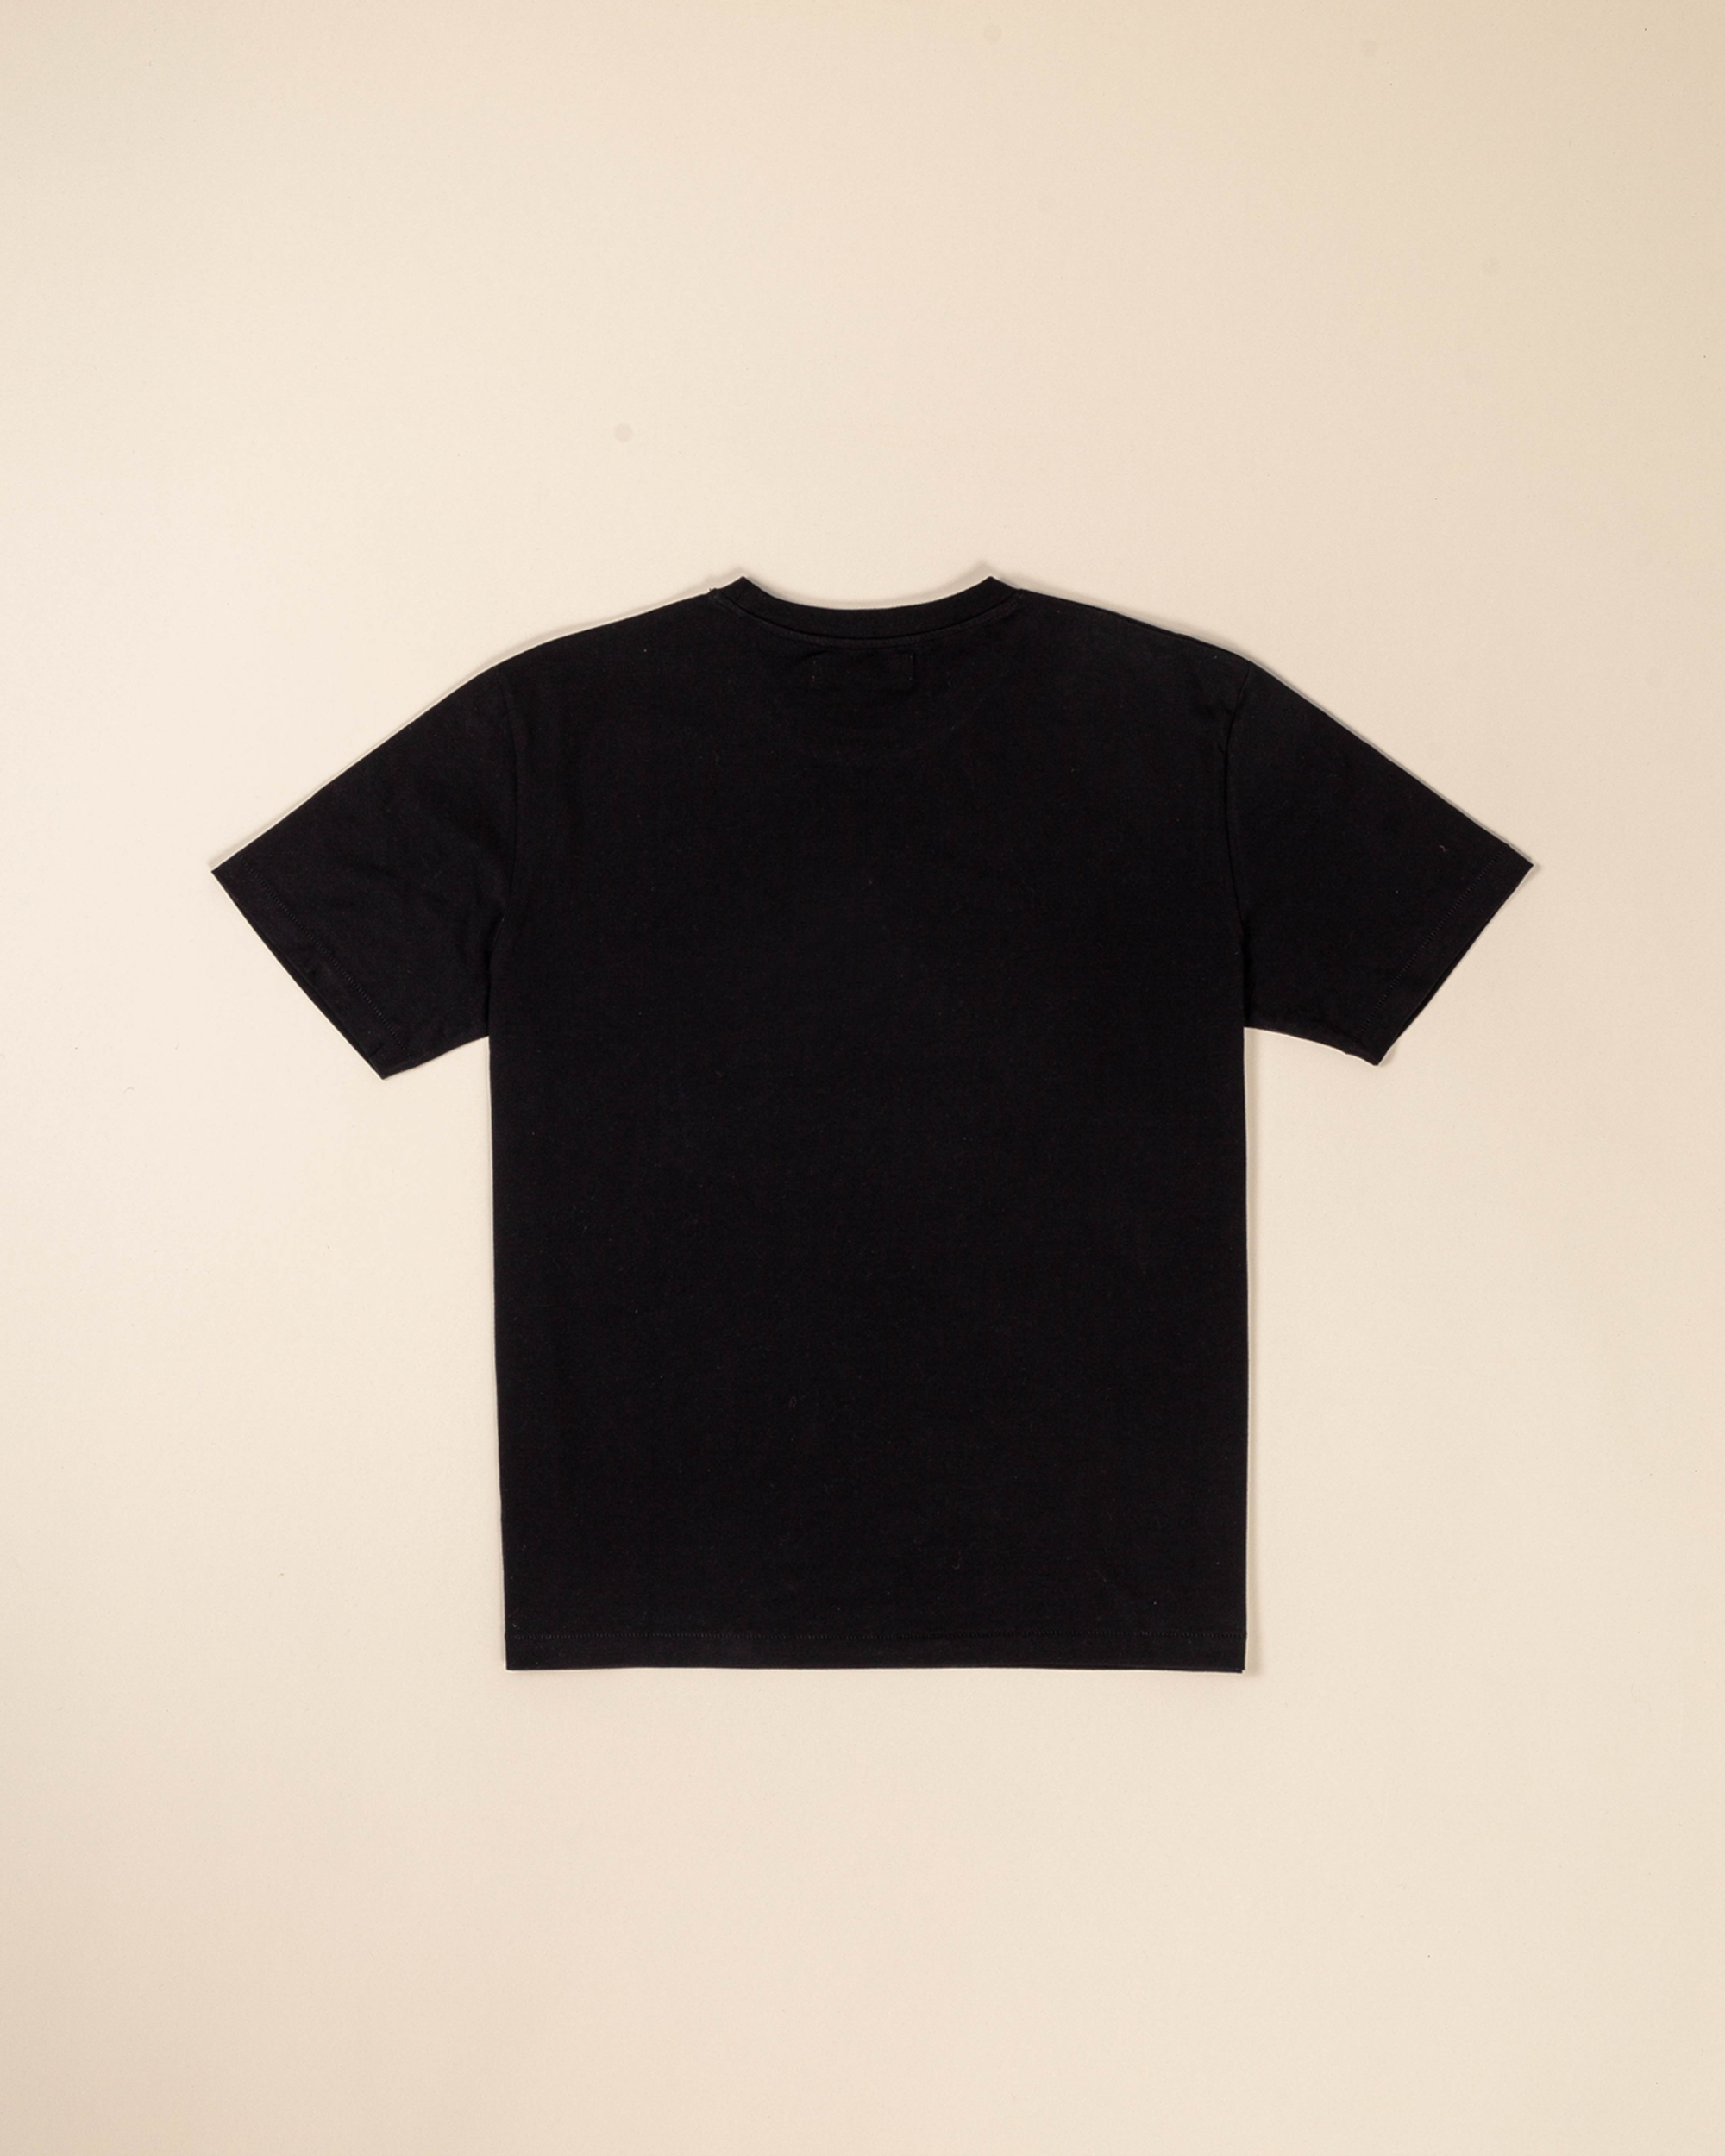 Lockwood Eclipse Graphic T-Shirt - Black